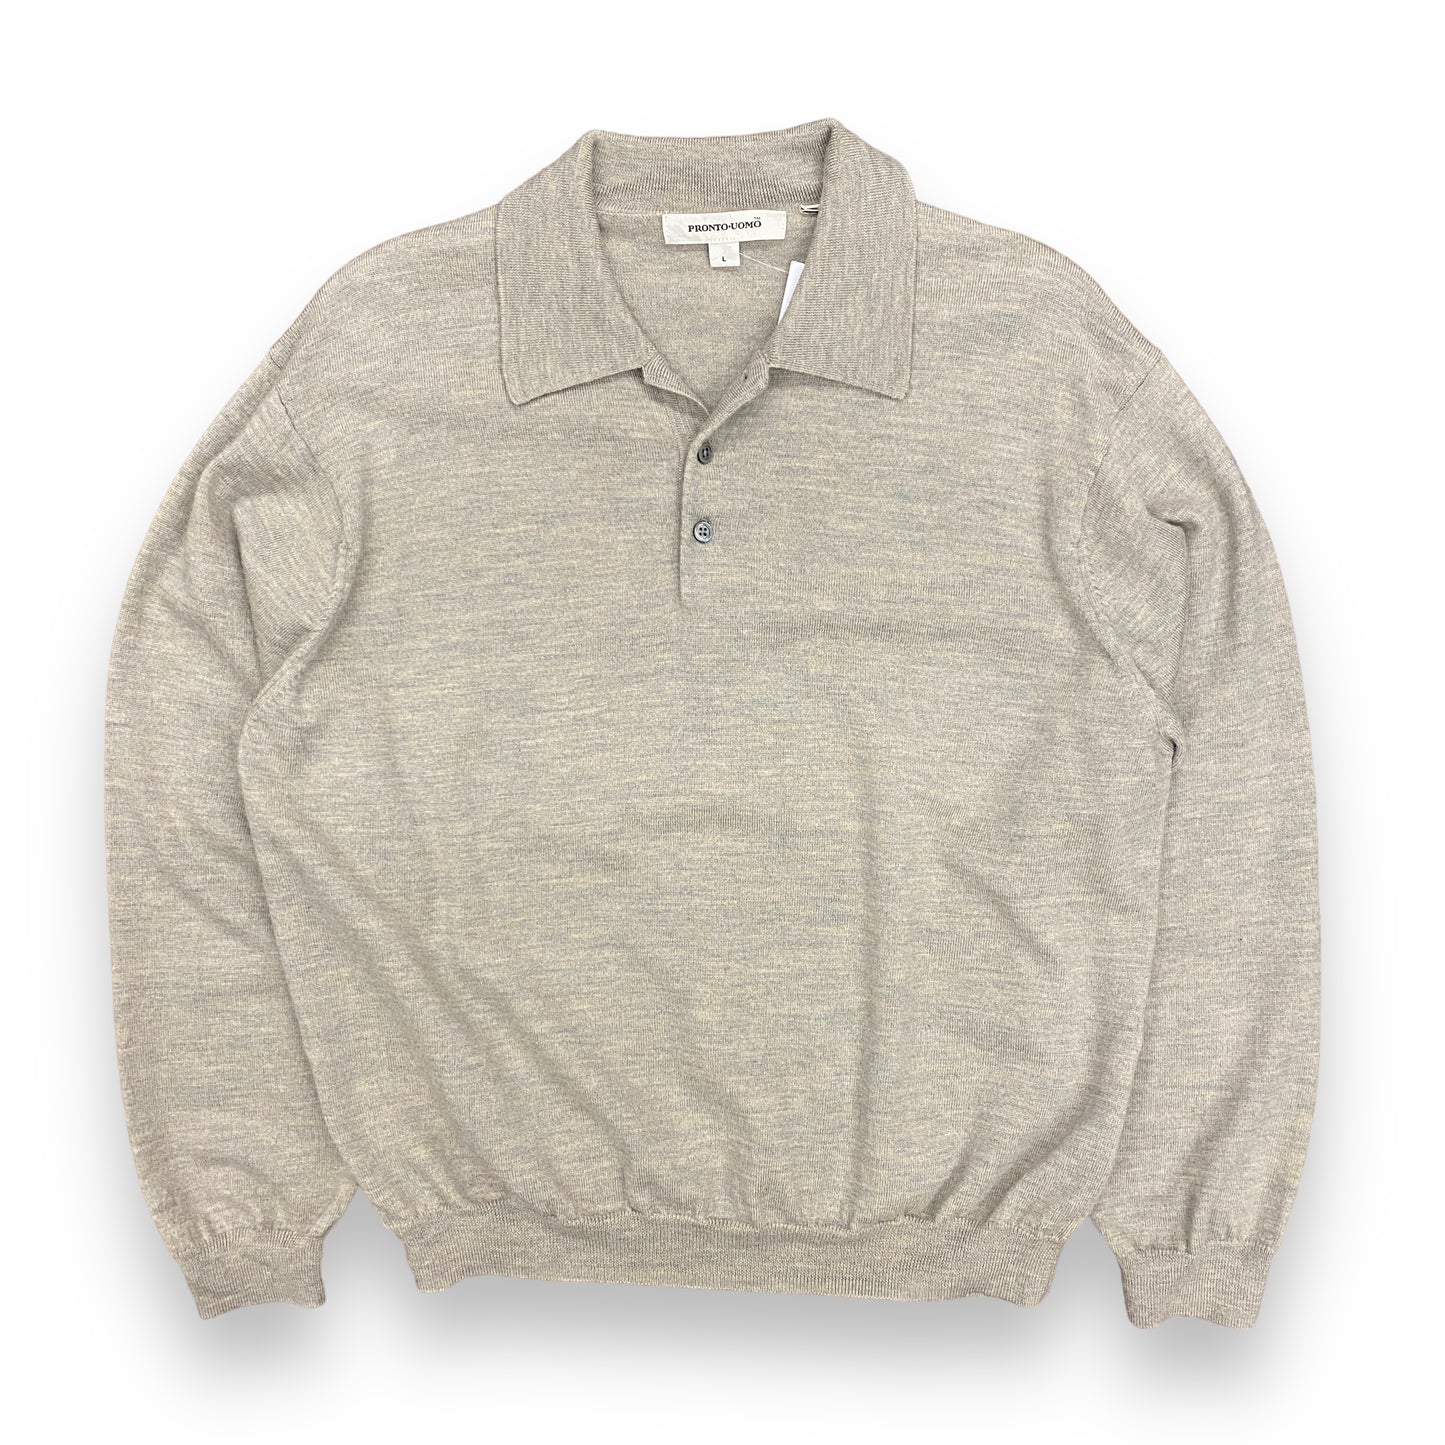 Pronto Uomo Merino Wool Collared Sweater - Size Large